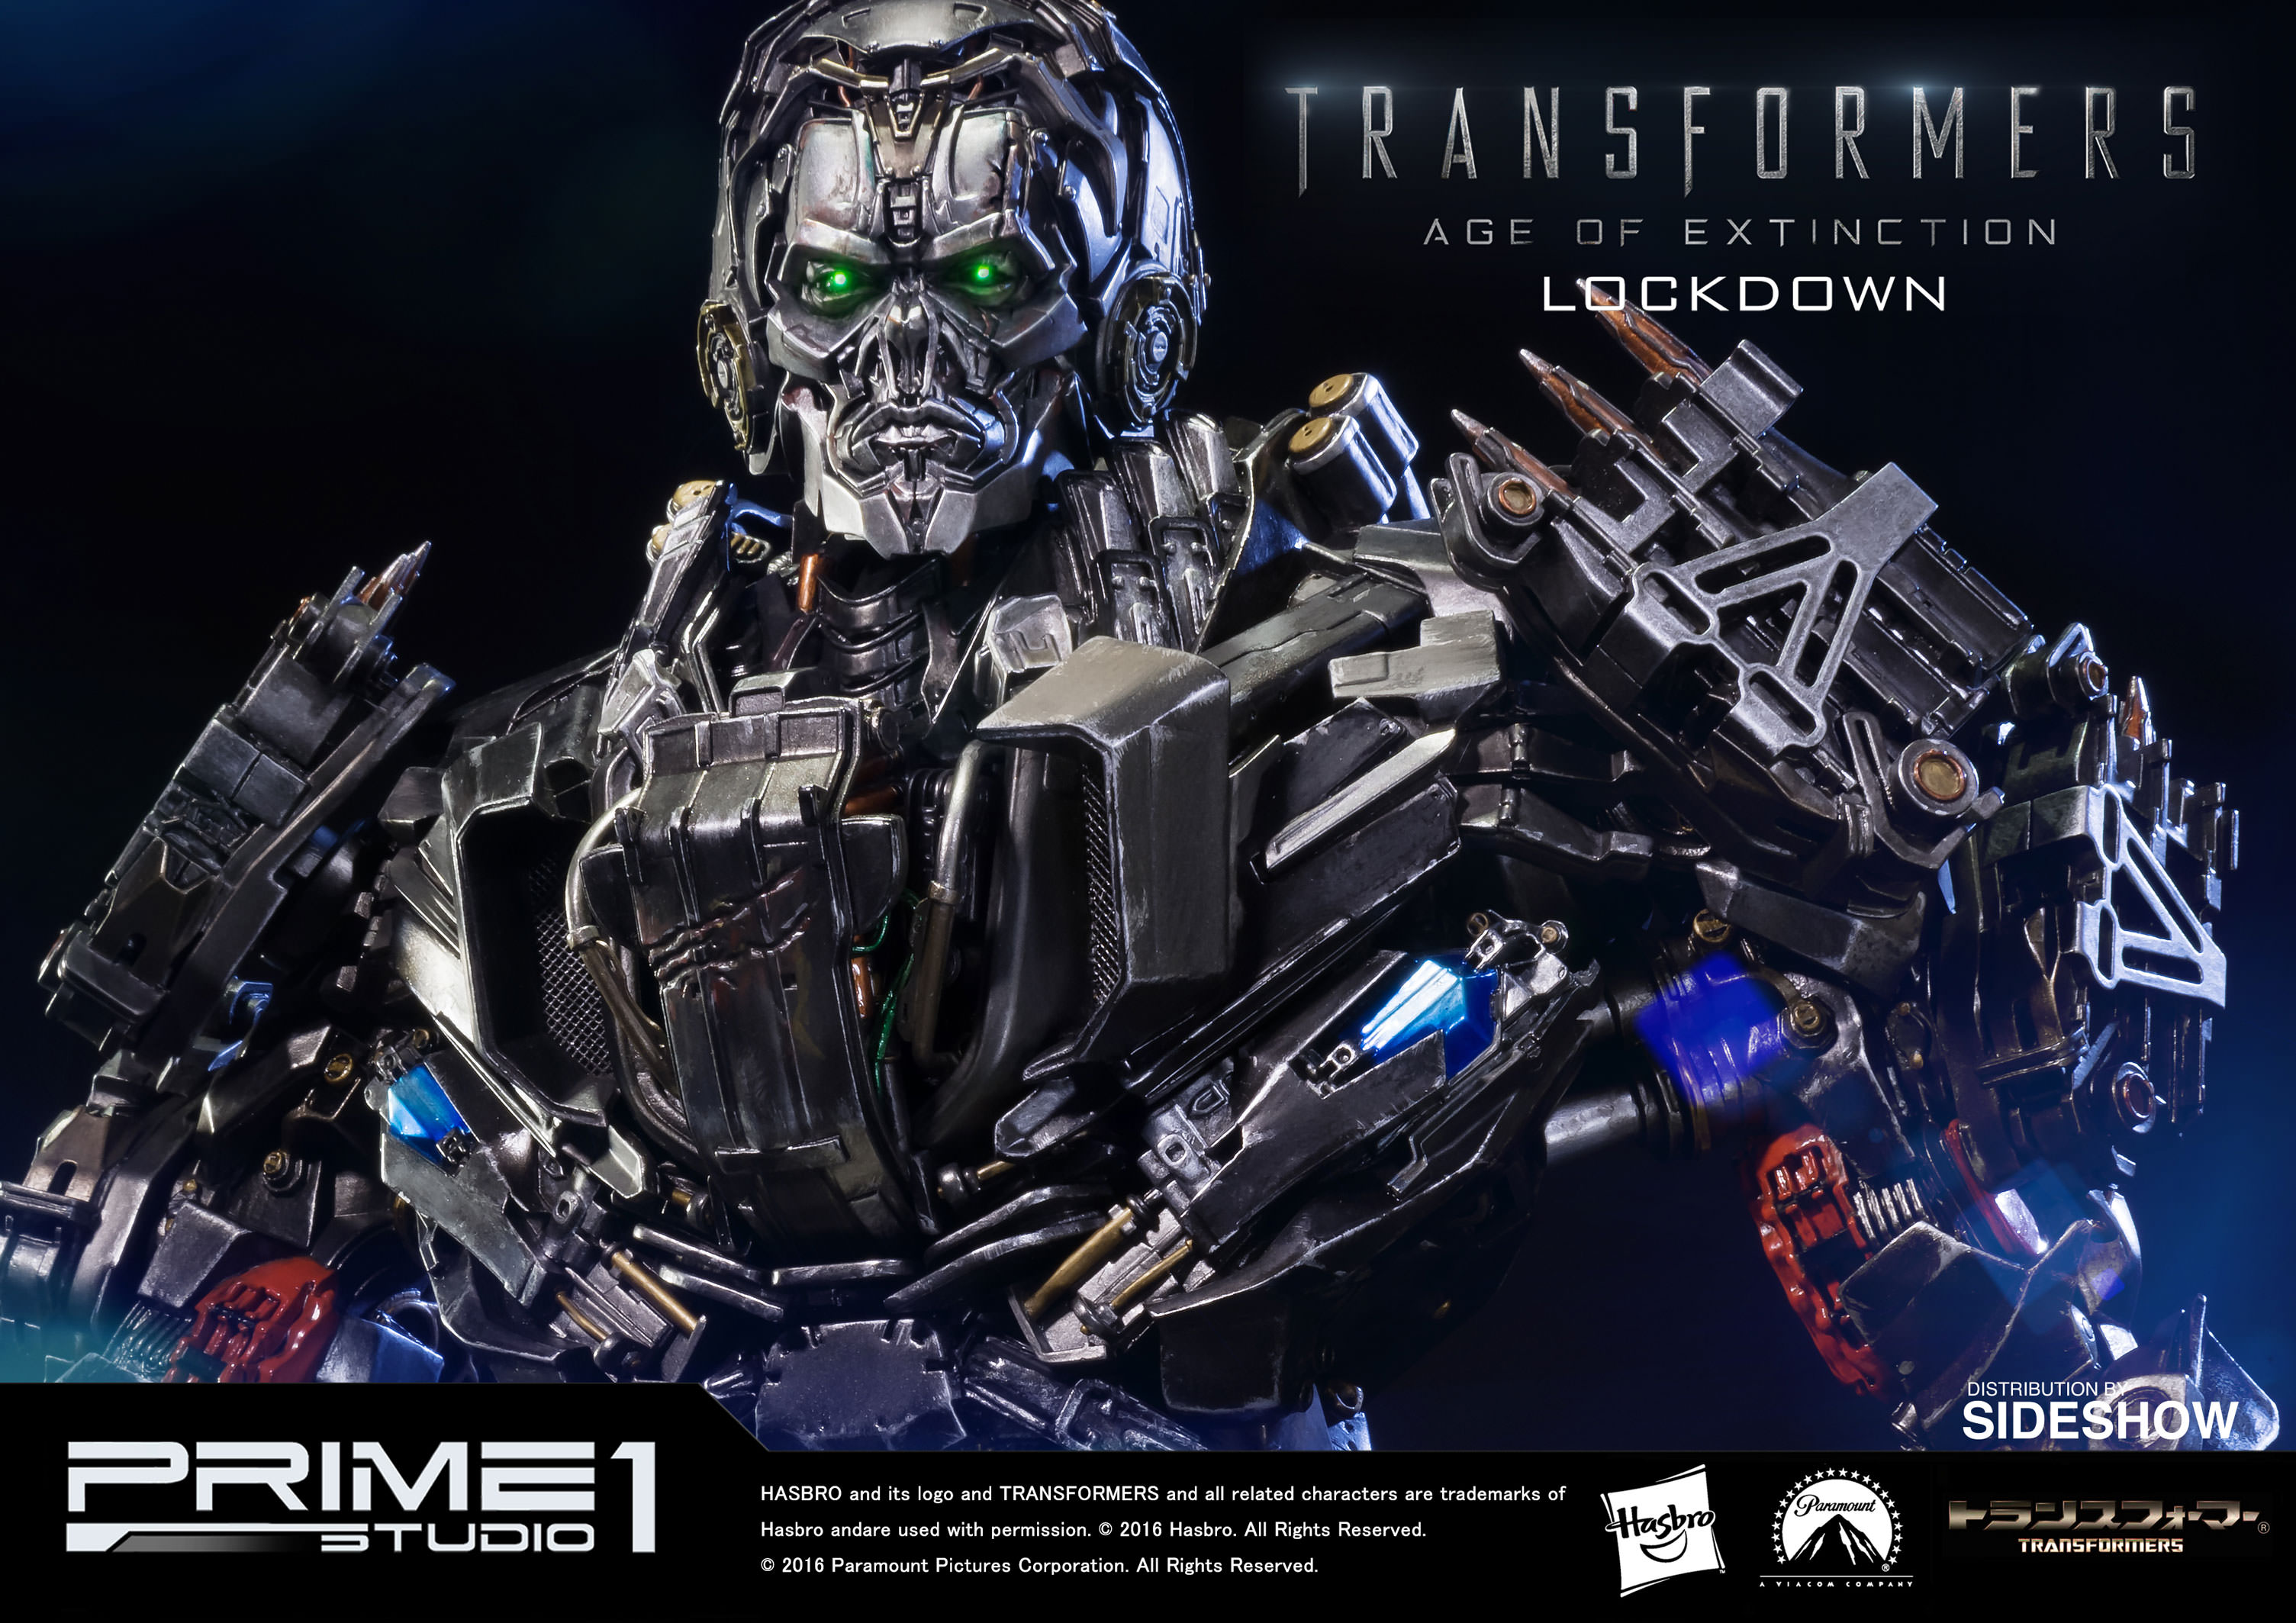 Transformers Lockdown Polystone Statue by Prime 1 Studio | Sideshow